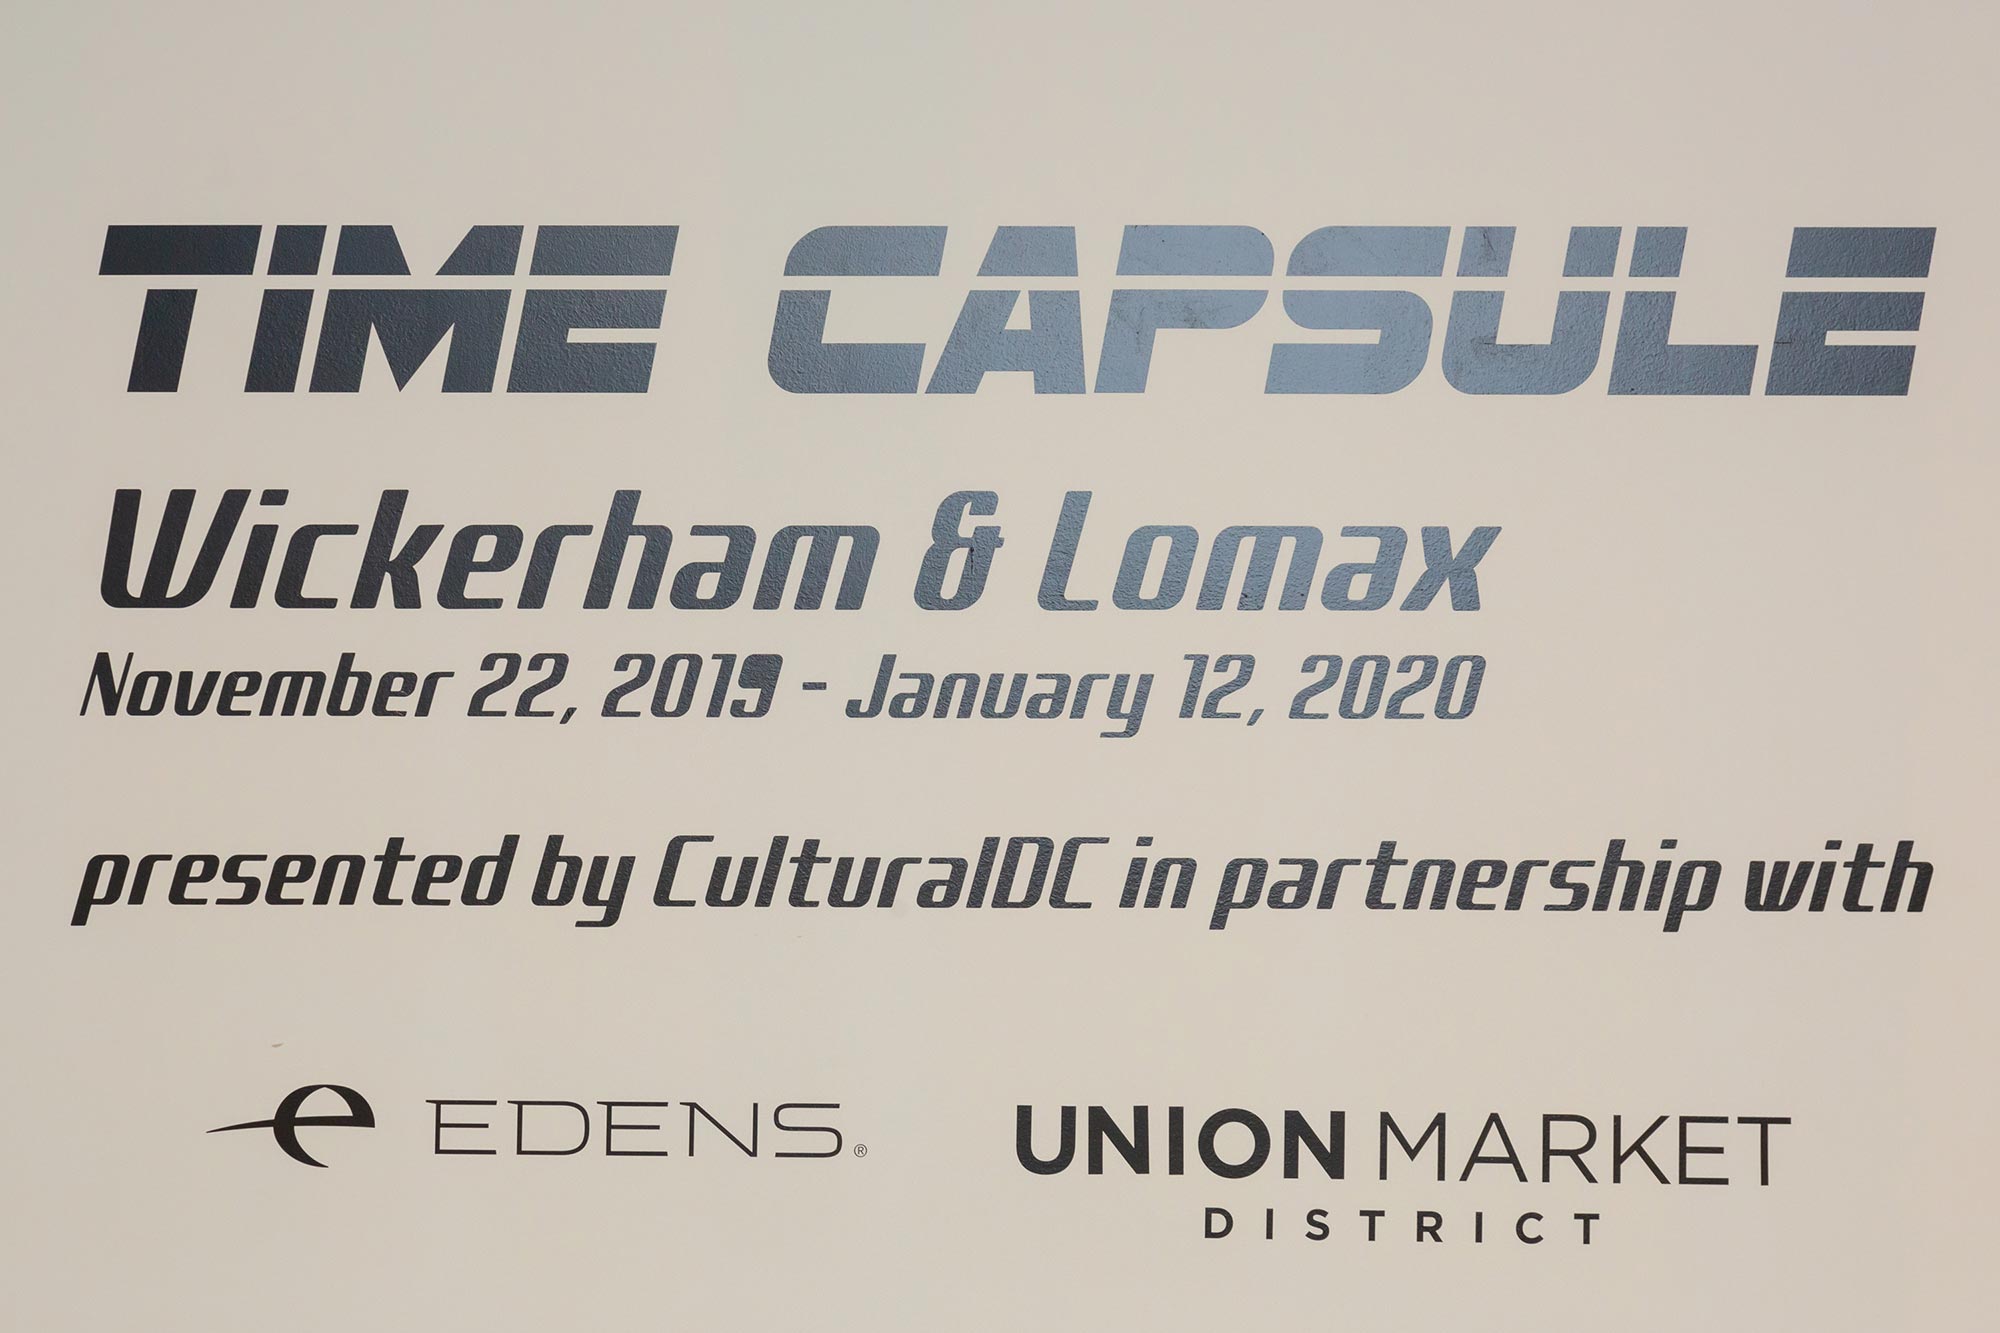 Wickerham & Lomax | Time Capsule